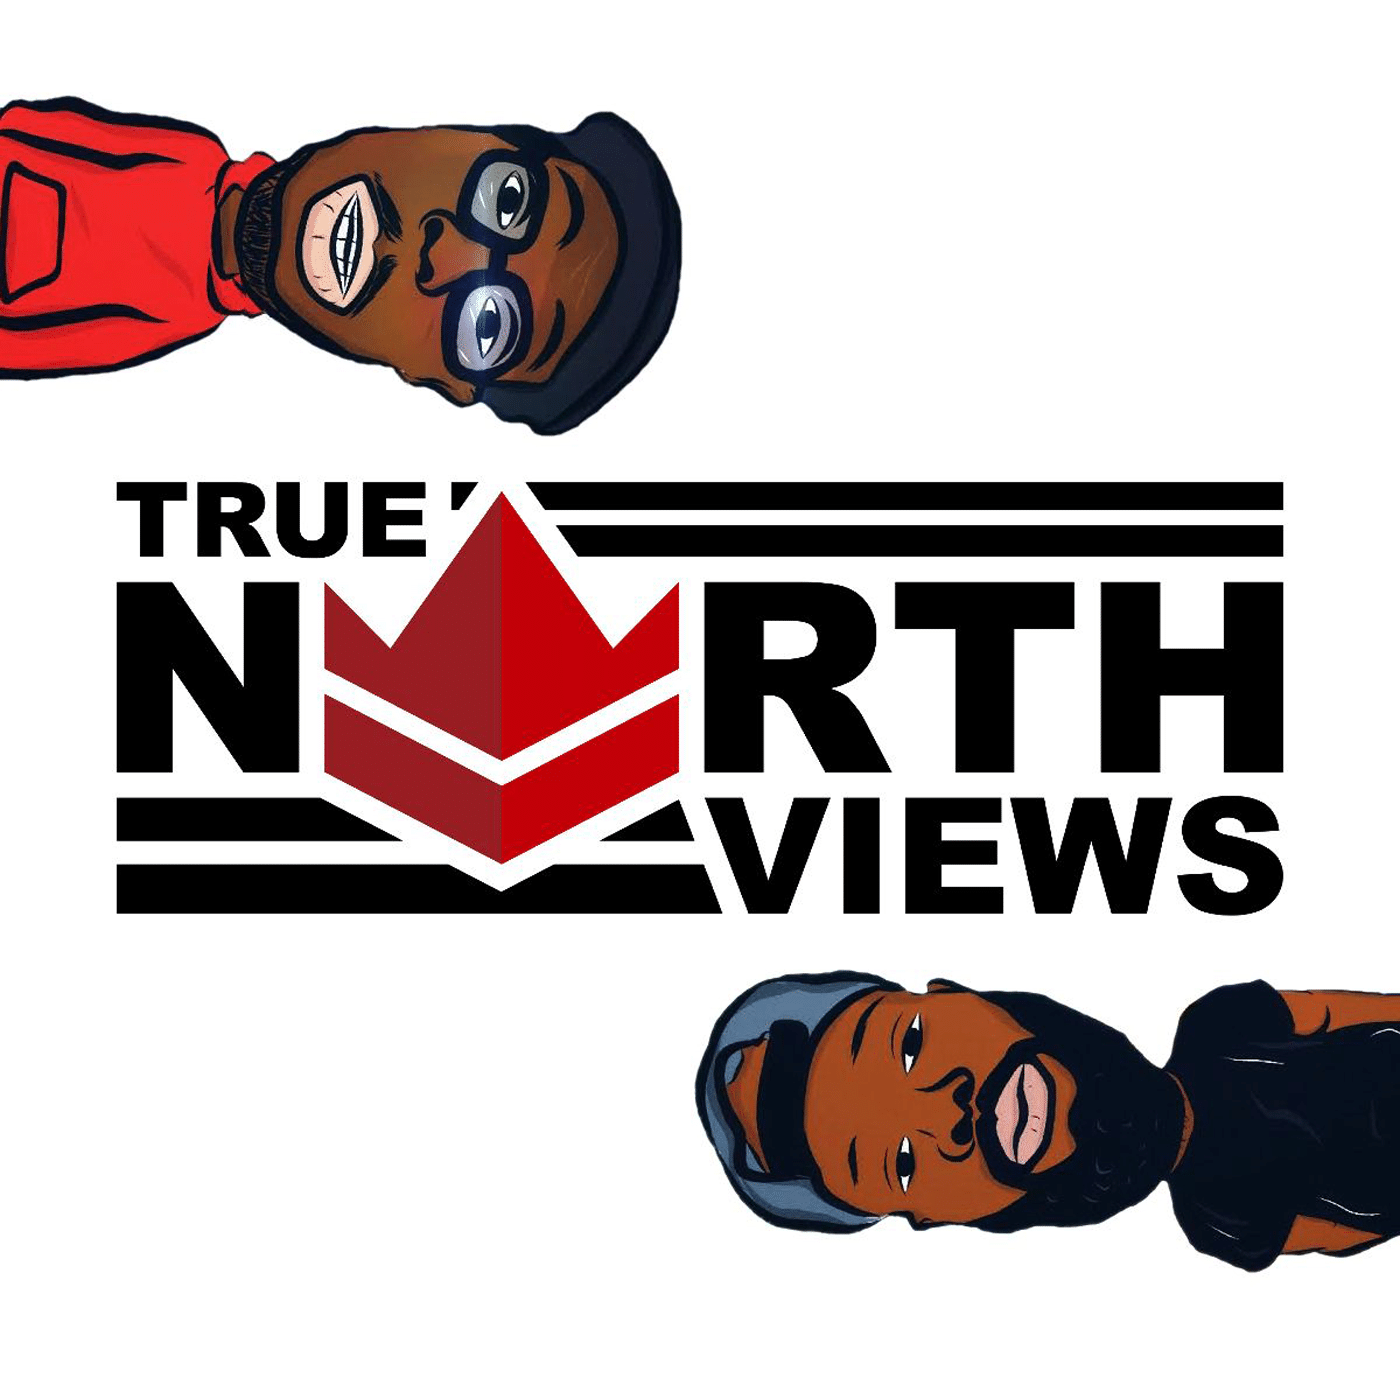 True North Views Podcast